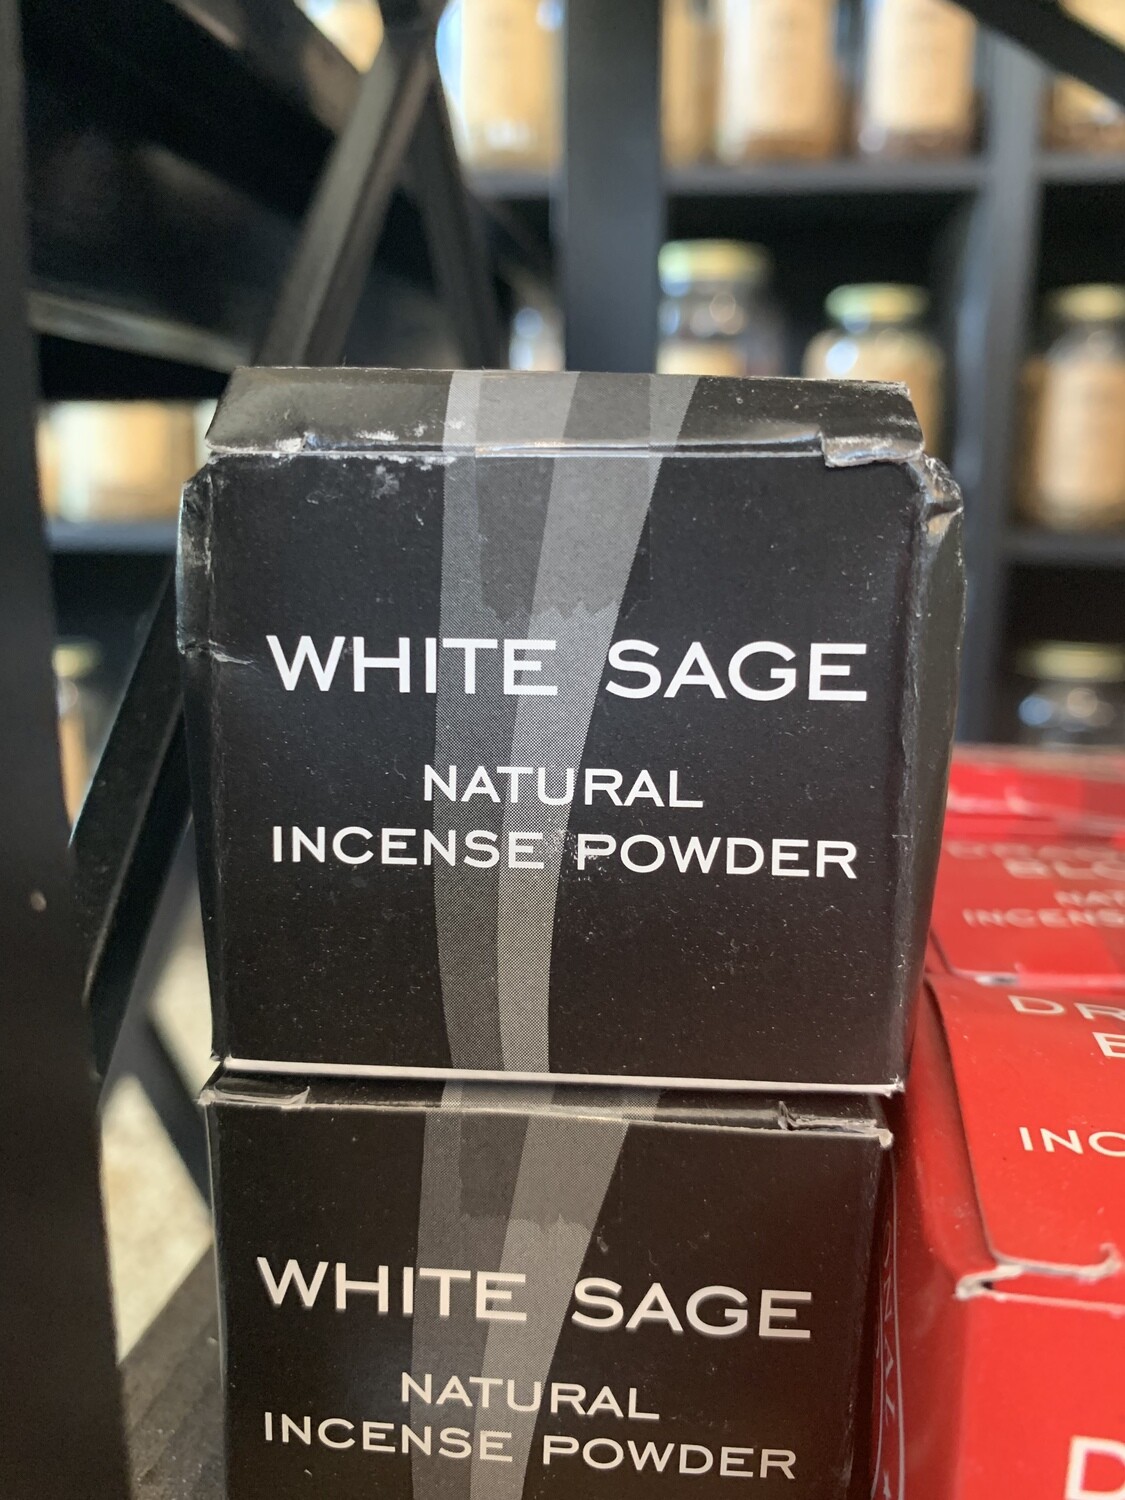 Boxed Incense Powder White Sage